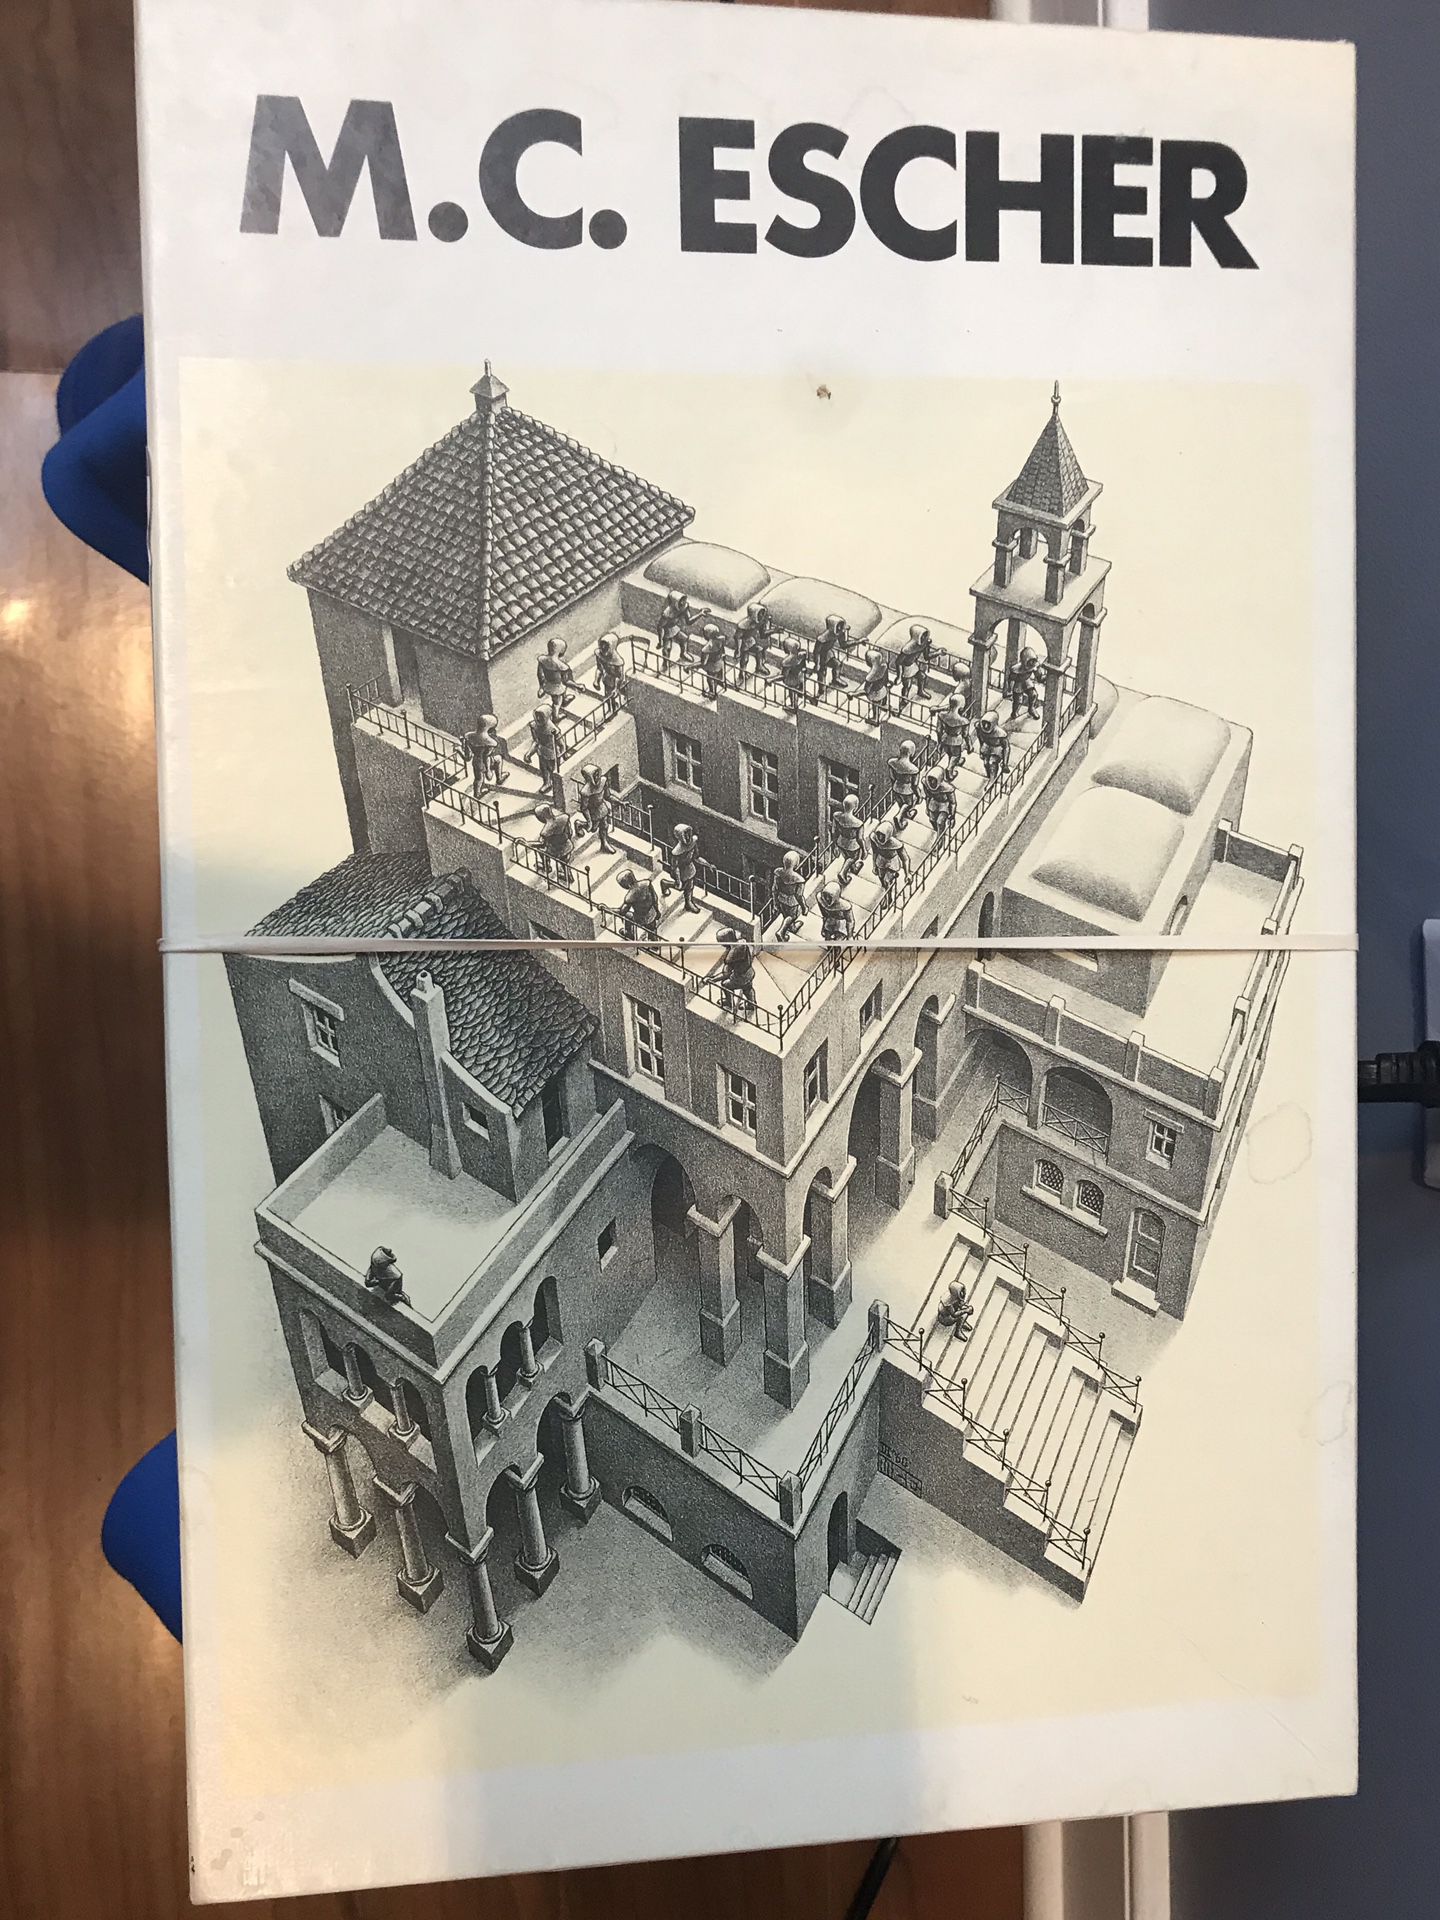 Ascending And Descending M.C. Escher Jigsaw Puzzle 1000pc by Selegiochi